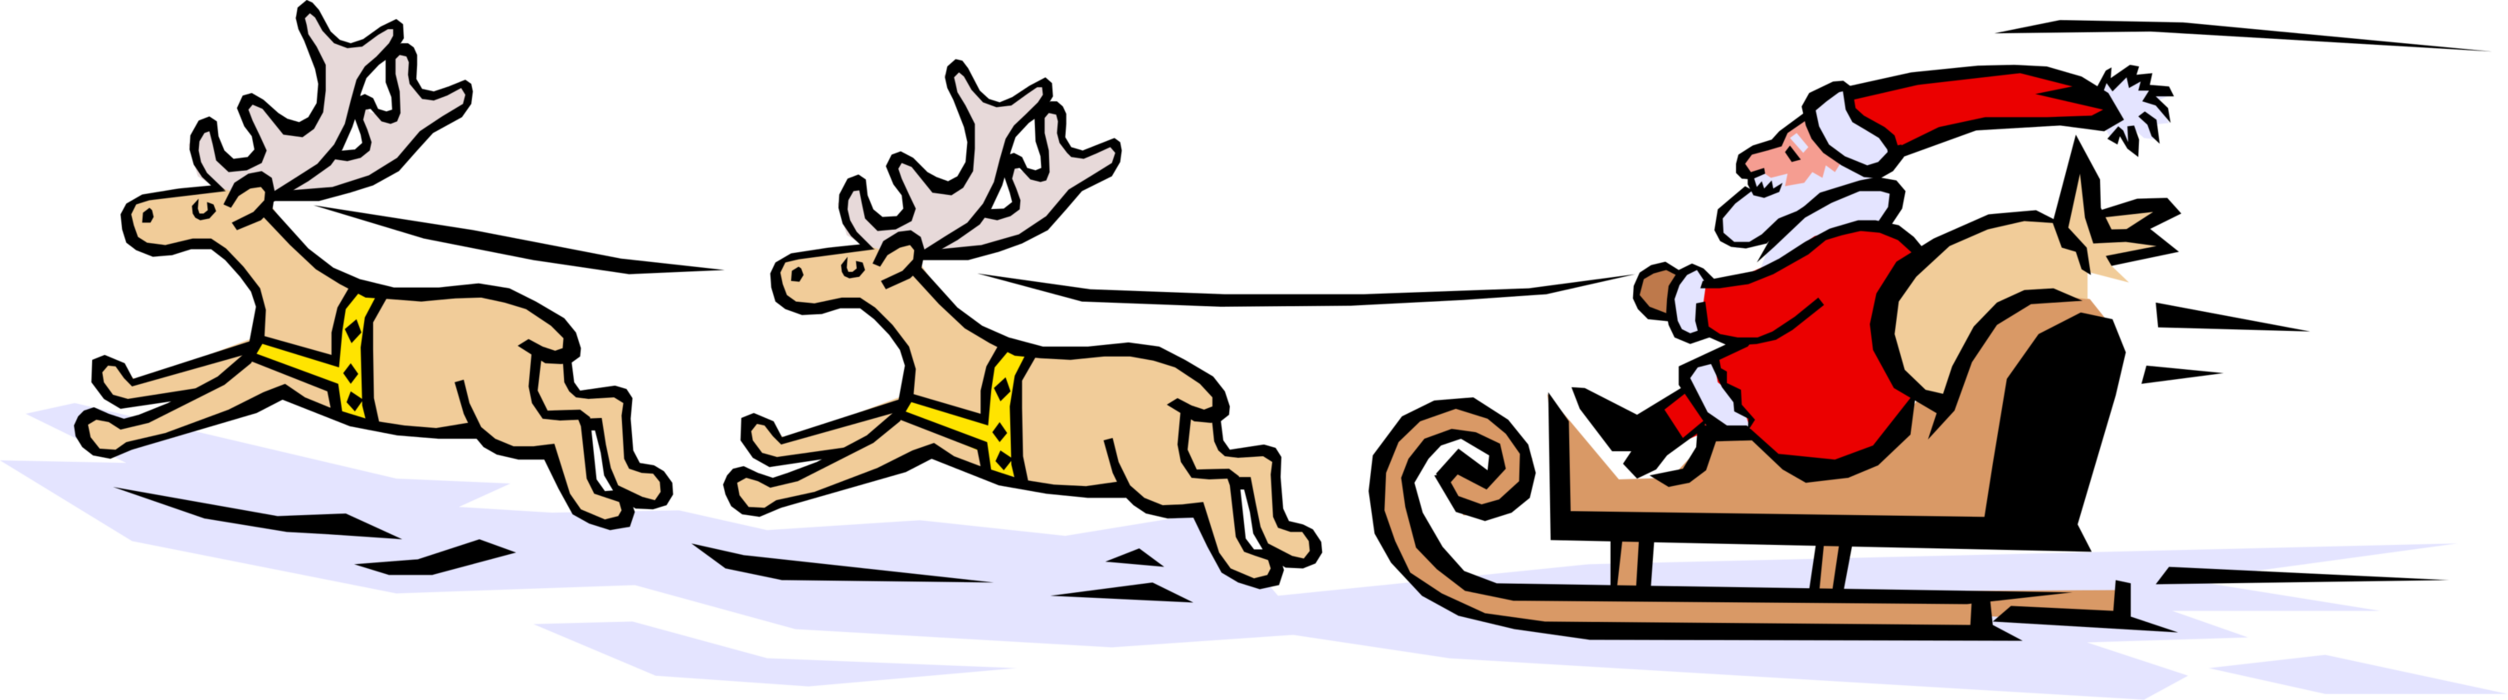 Vector Illustration of Santa's Sleigh with Reindeer